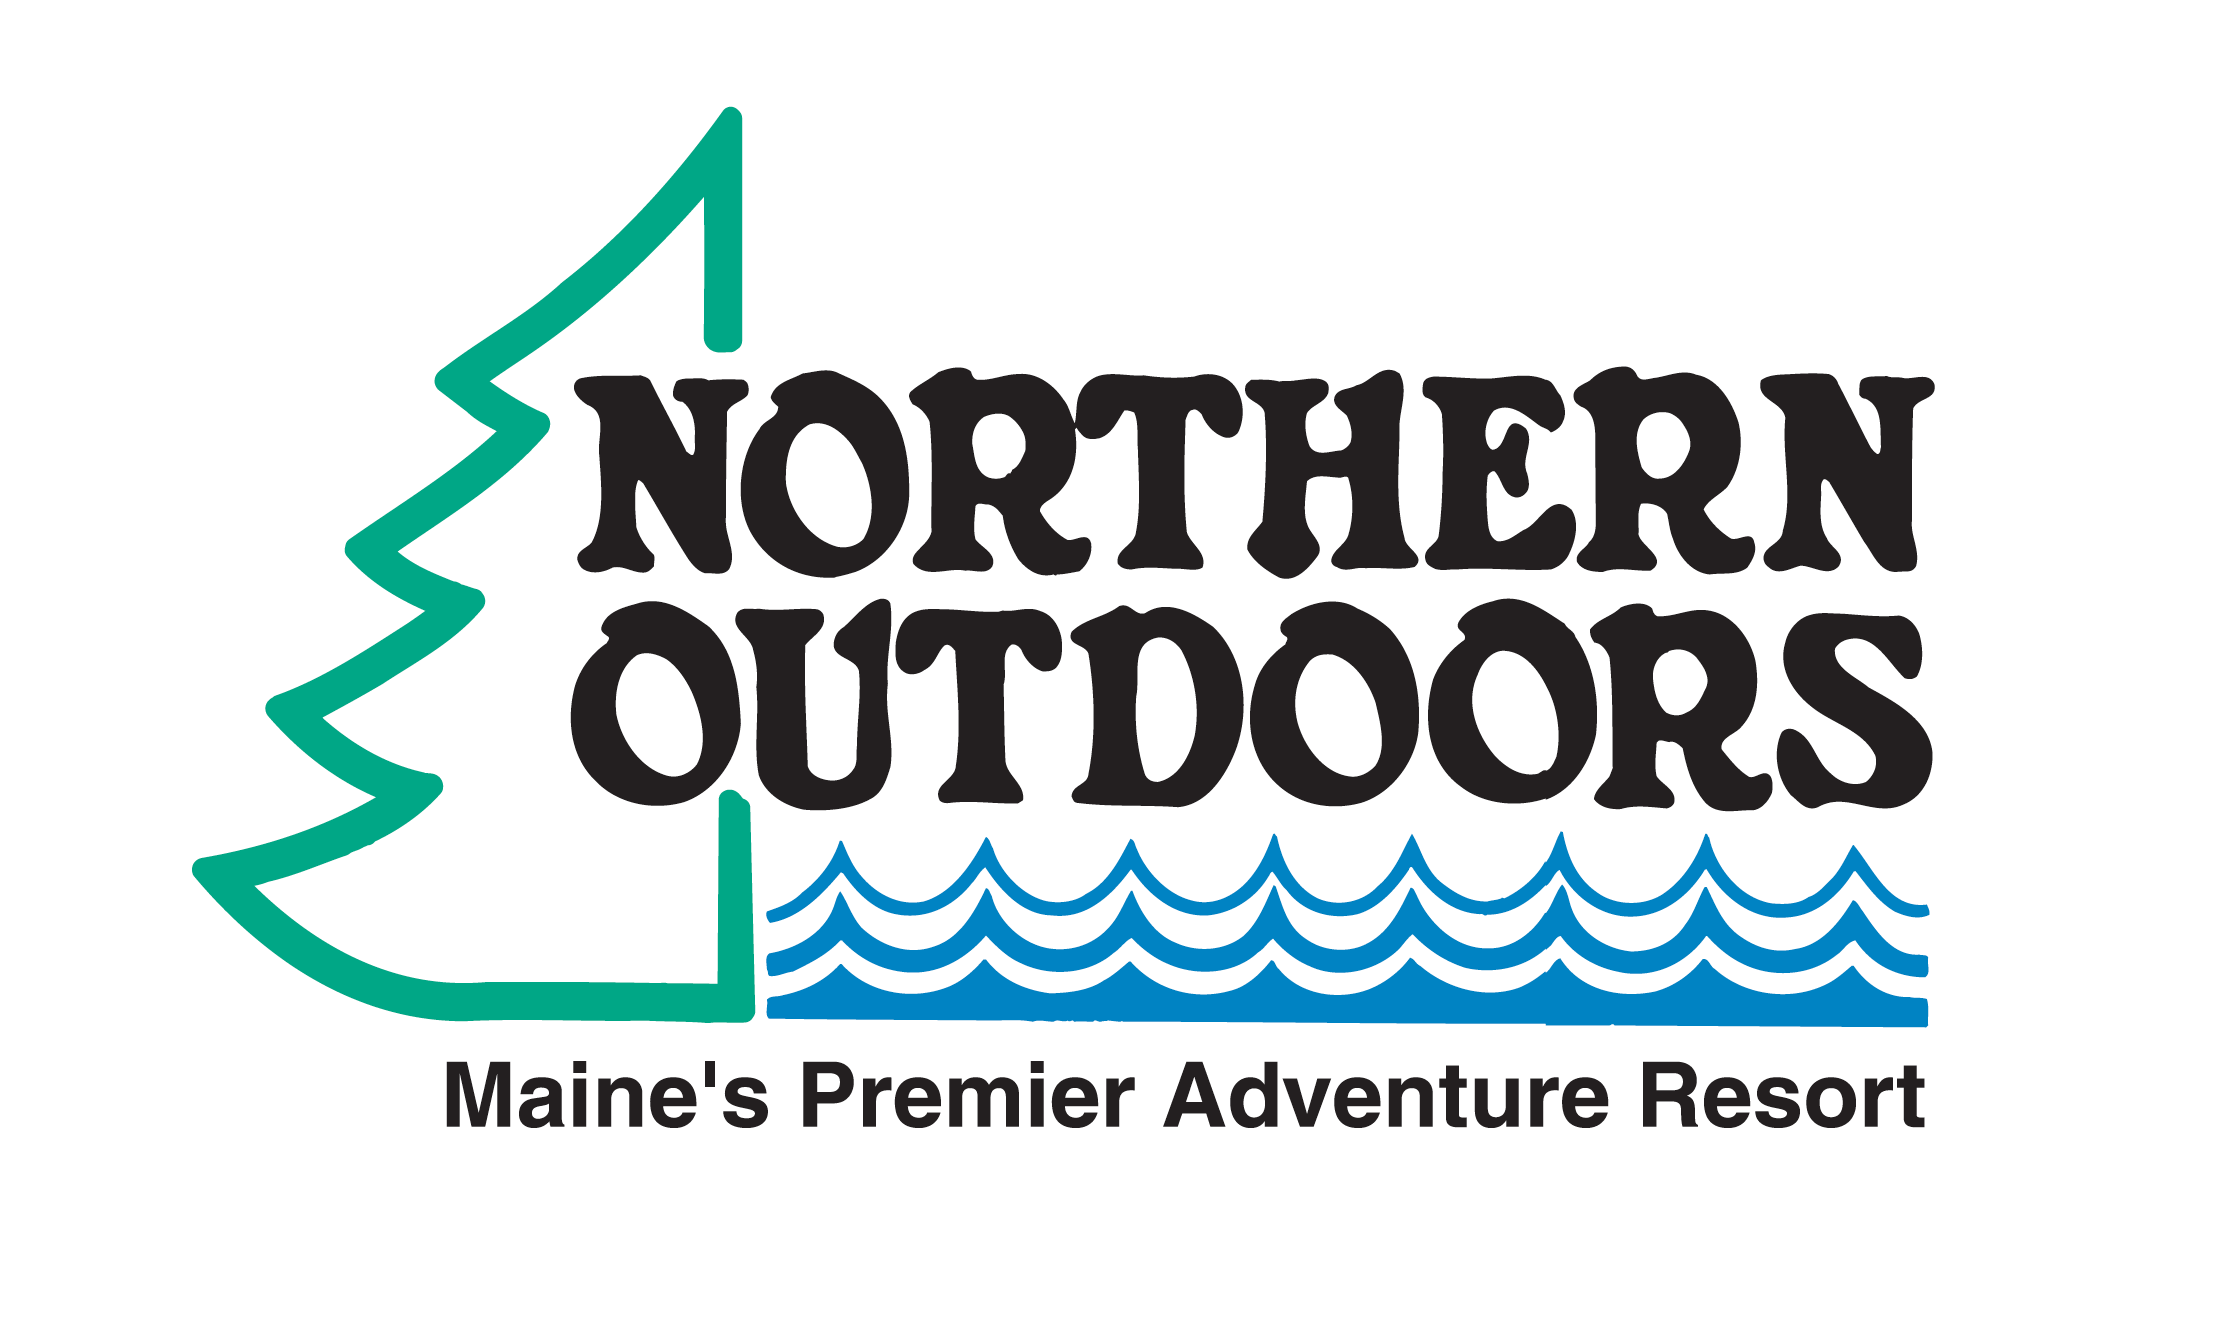 Northern Outdoors - Katahdin Adventure Base Camp | The Maine Highlands